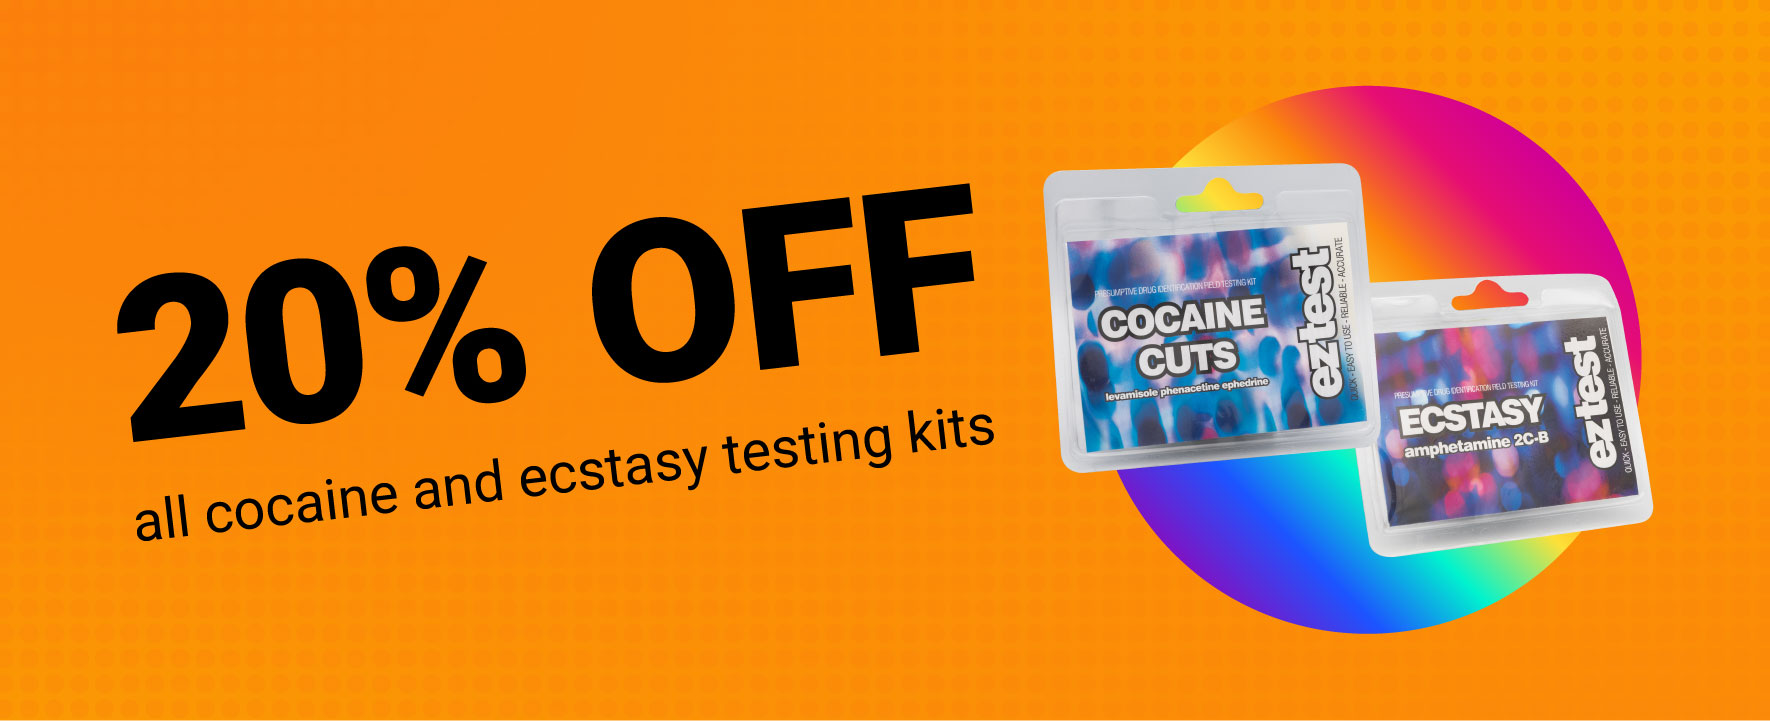 EZ Test Kits - Cocaine & Ecstasy Testing - Home Drug Testing Kits